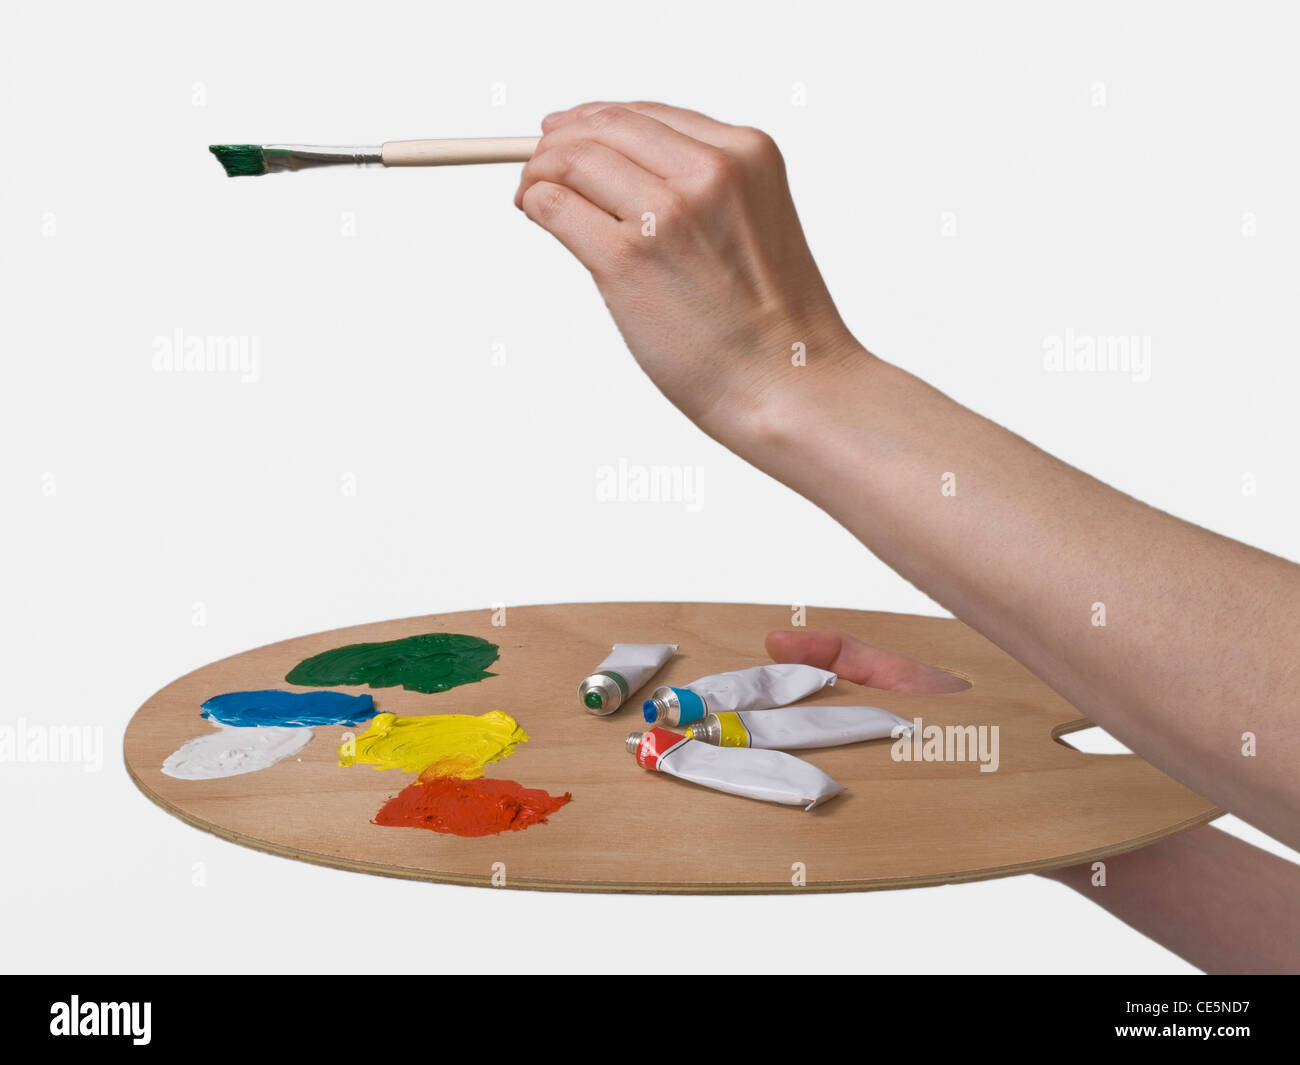 Eine Farbpalette mit verschiedenen Farben wird in der Hand gehalten | couleurs rehaussées de couleurs différentes est de tenir dans une main Banque D'Images